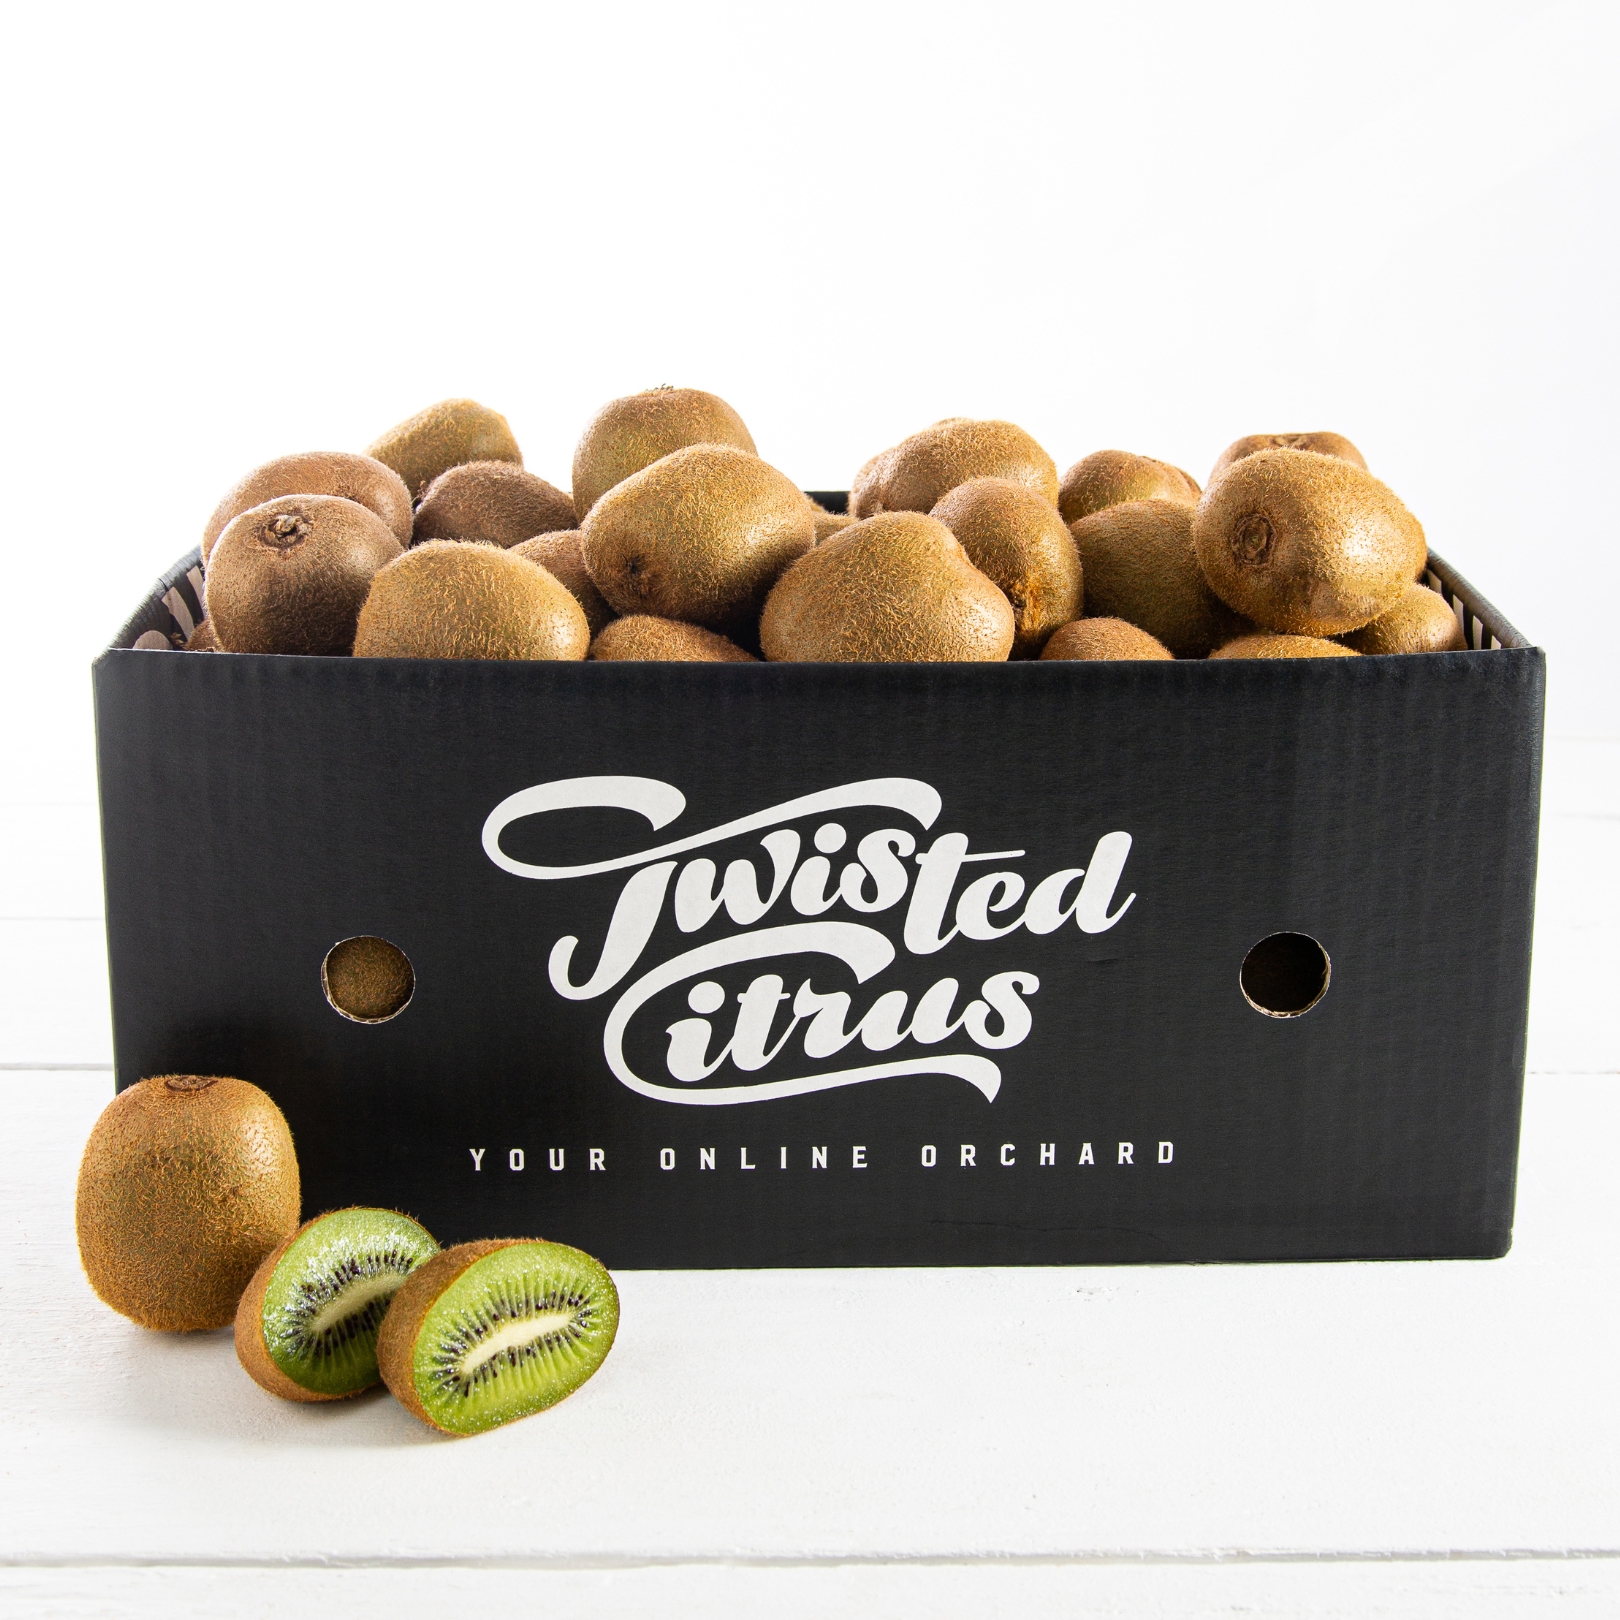 Kiwifruit - Green fruit box delivery nz